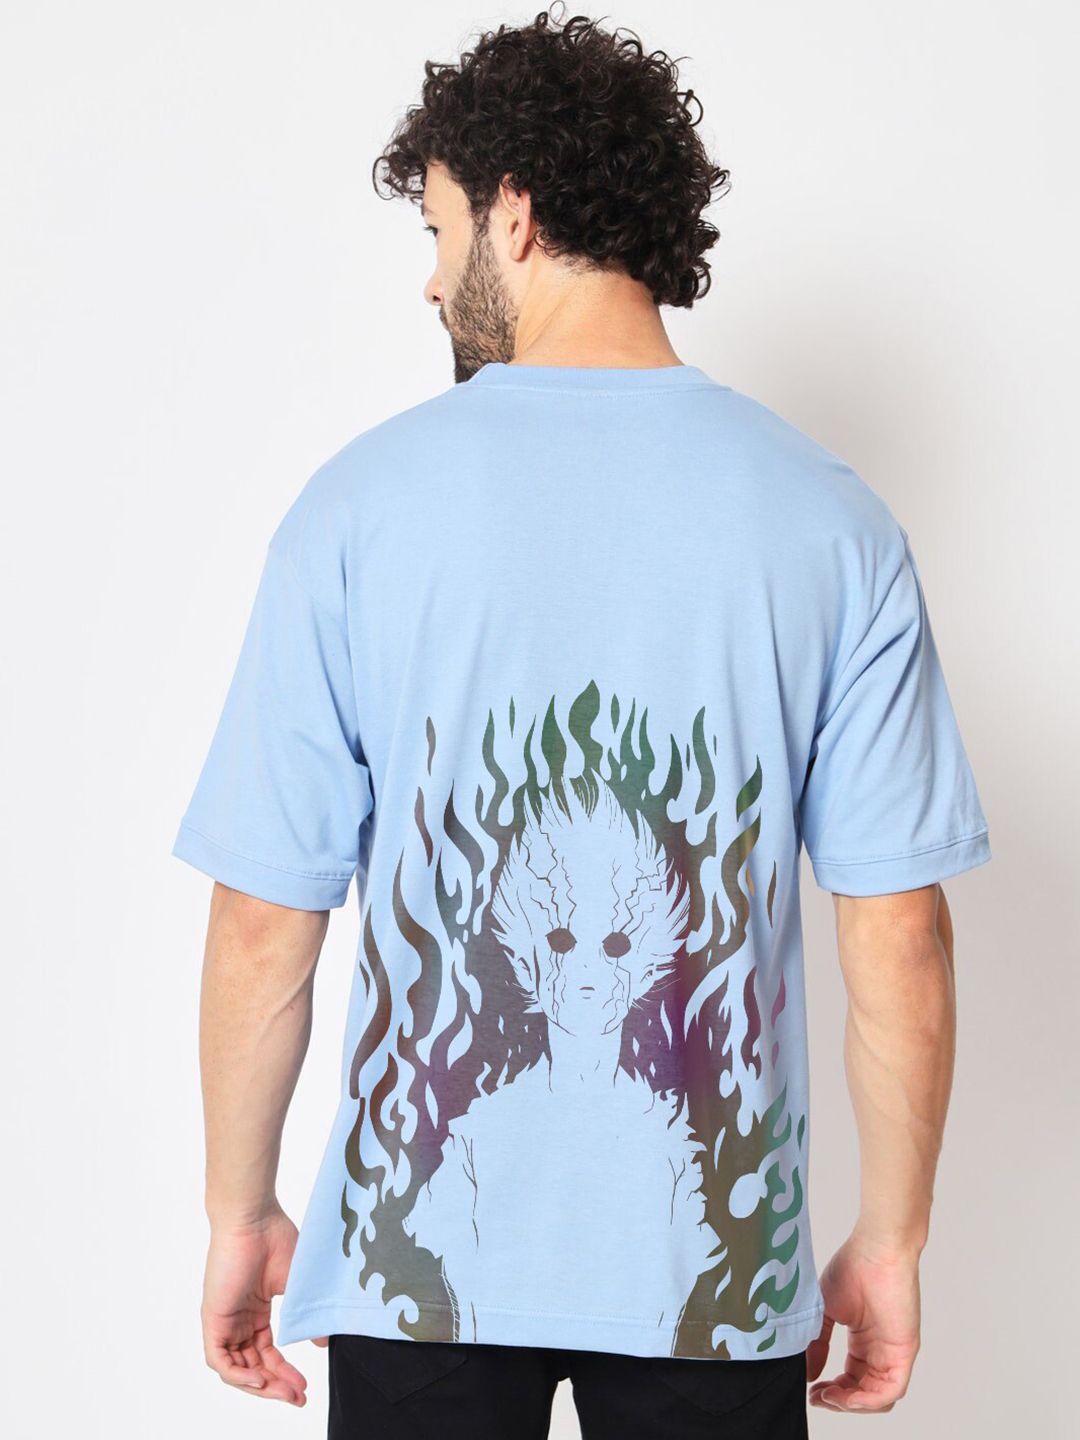 crazymonk unisex blue printed t-shirt